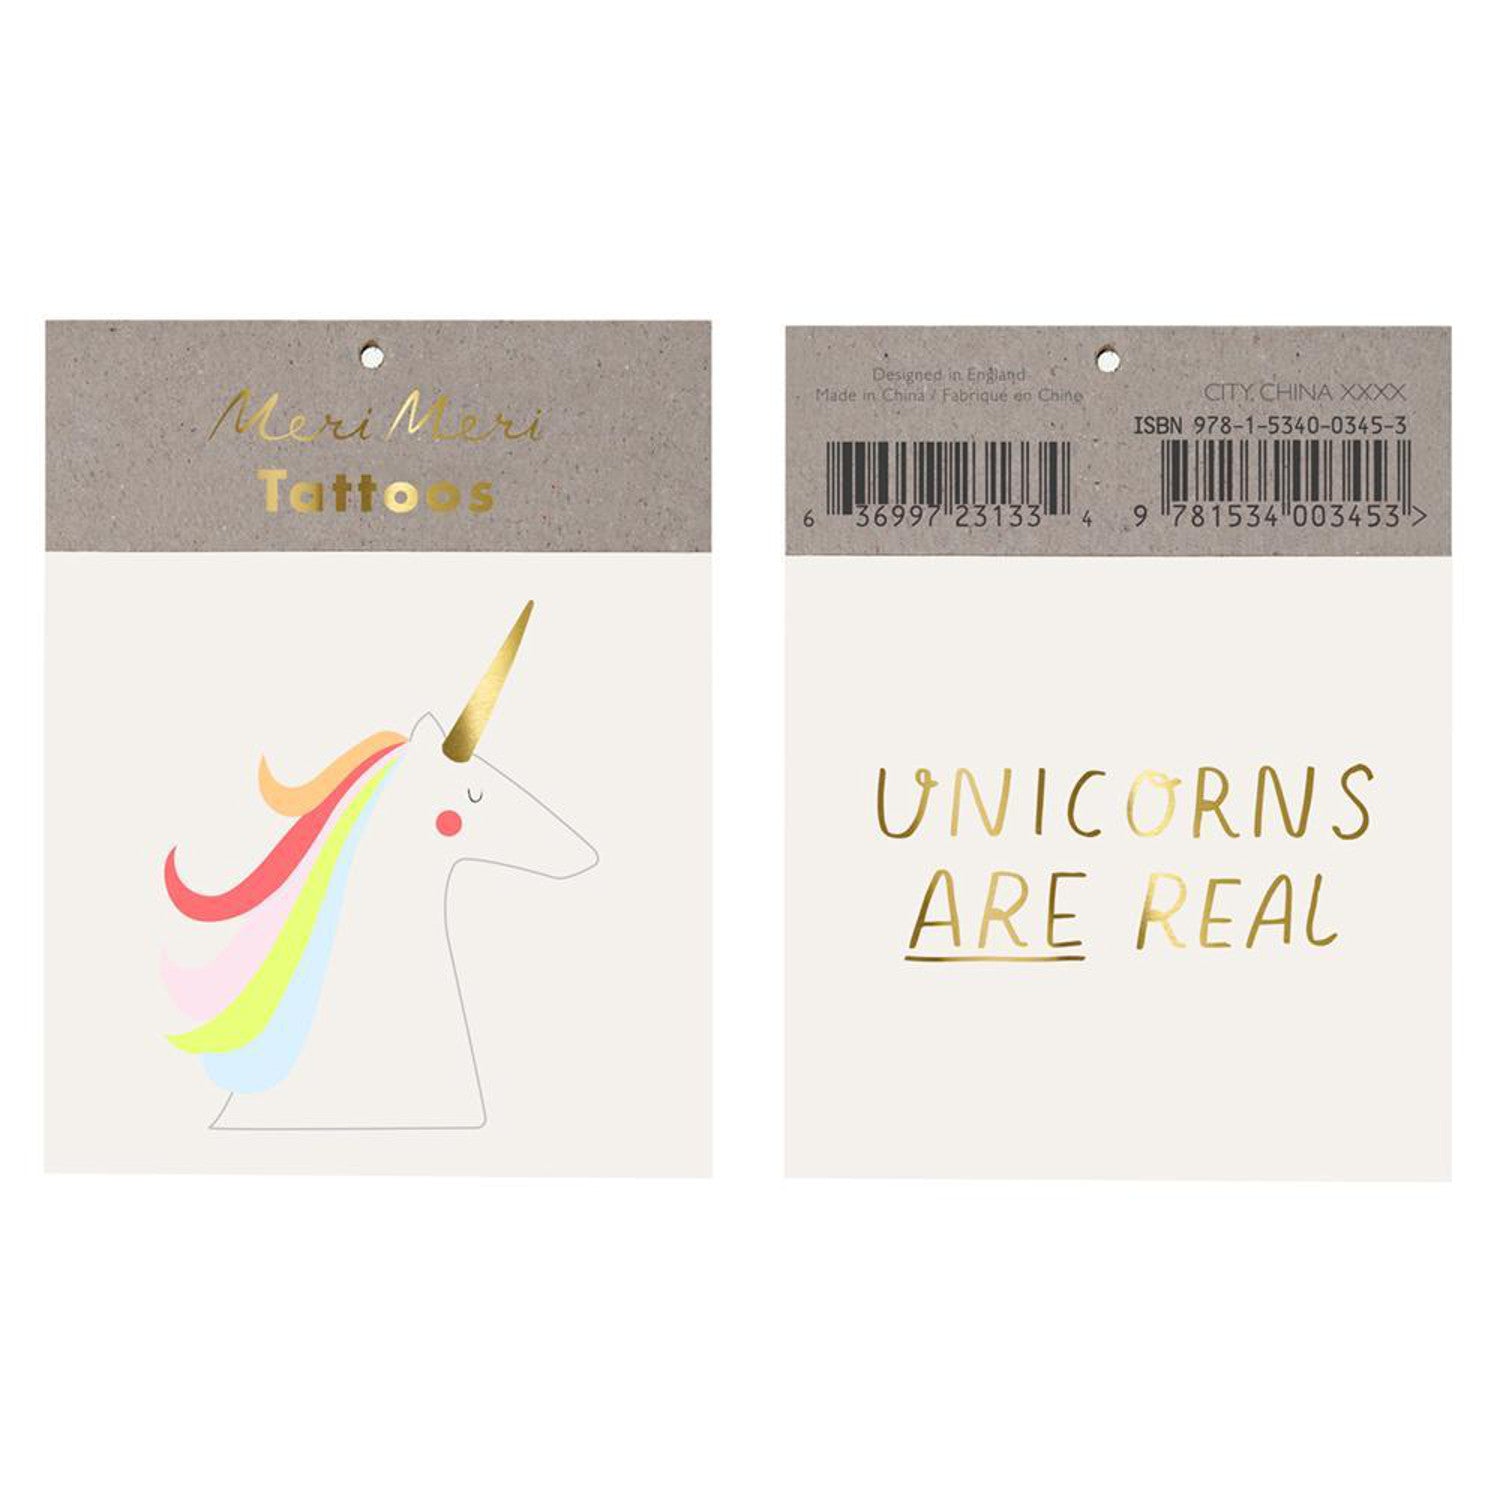 Meri Meri Tattoos Unicorn and Unicorns are Real